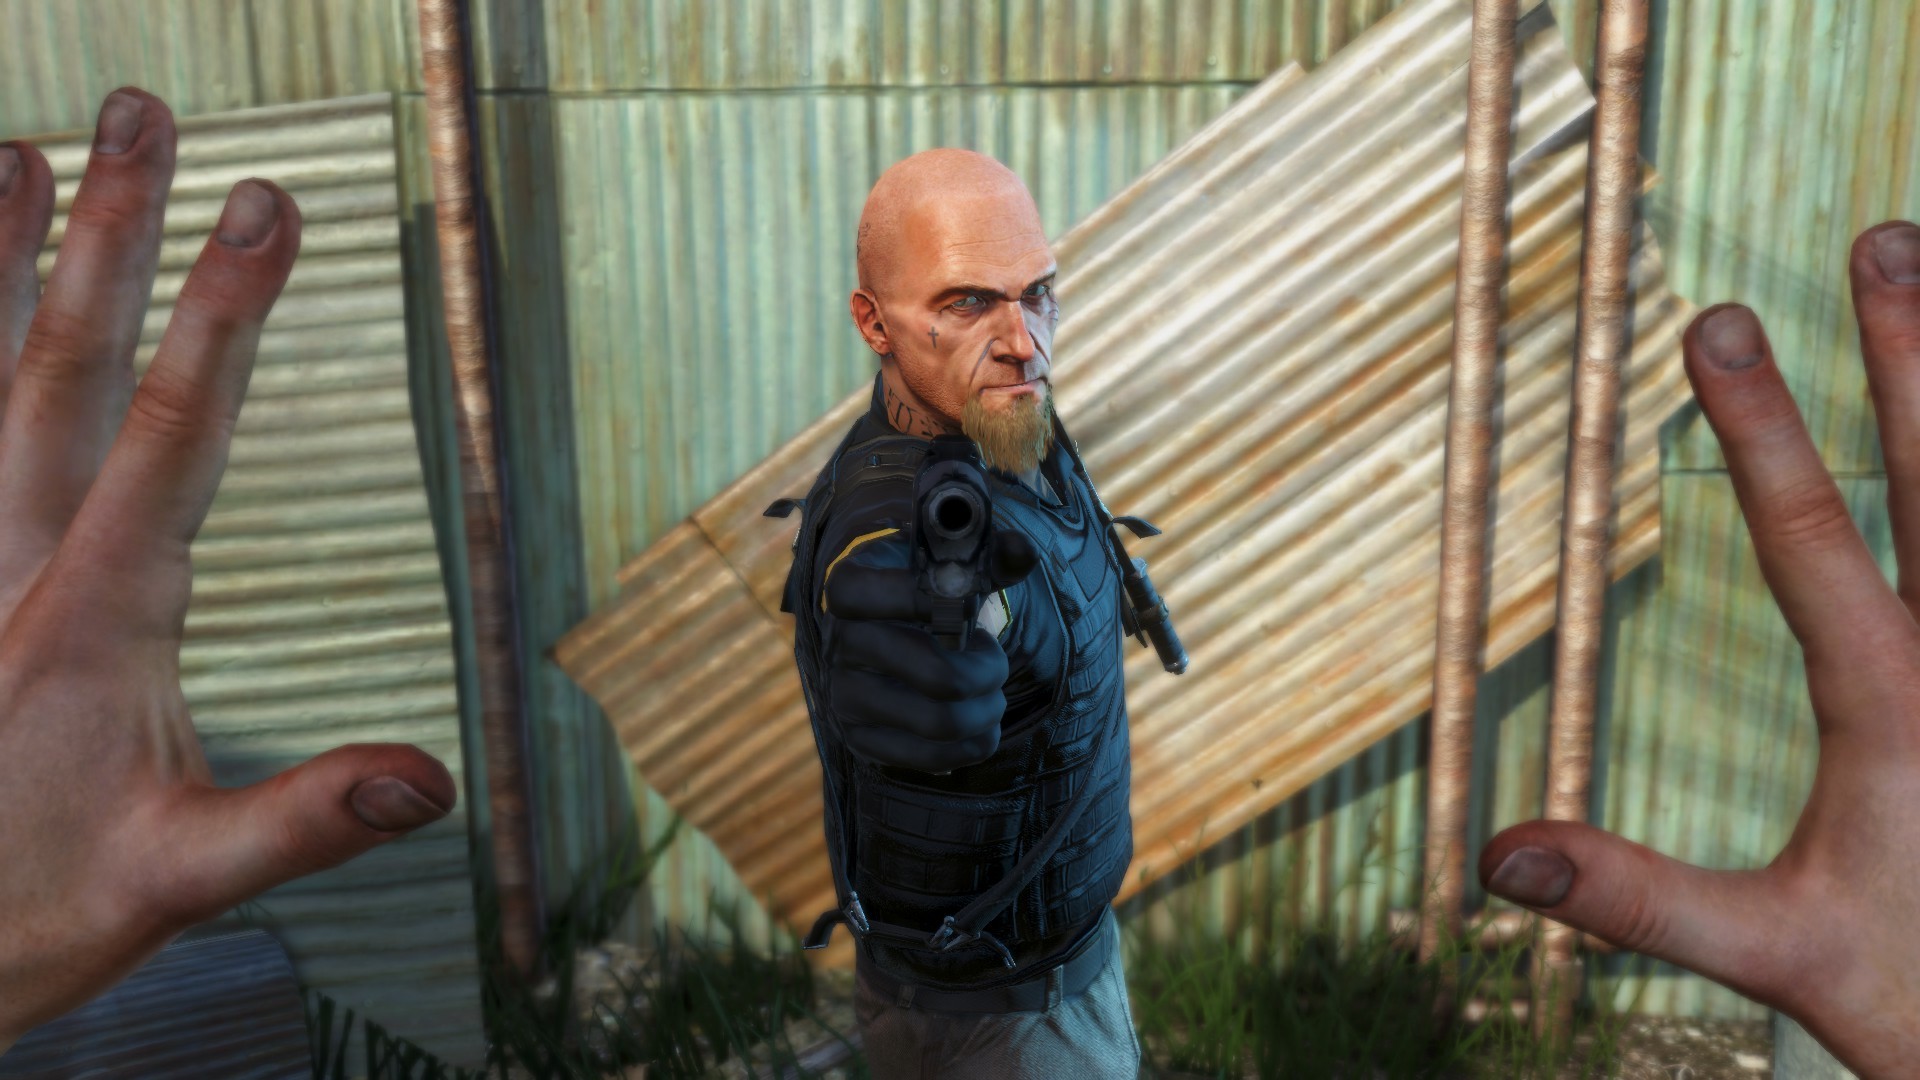 General 1920x1080 Far Cry 3 video games screen shot PC gaming hands gun bald men beard 2012 (Year) POV at gunpoint